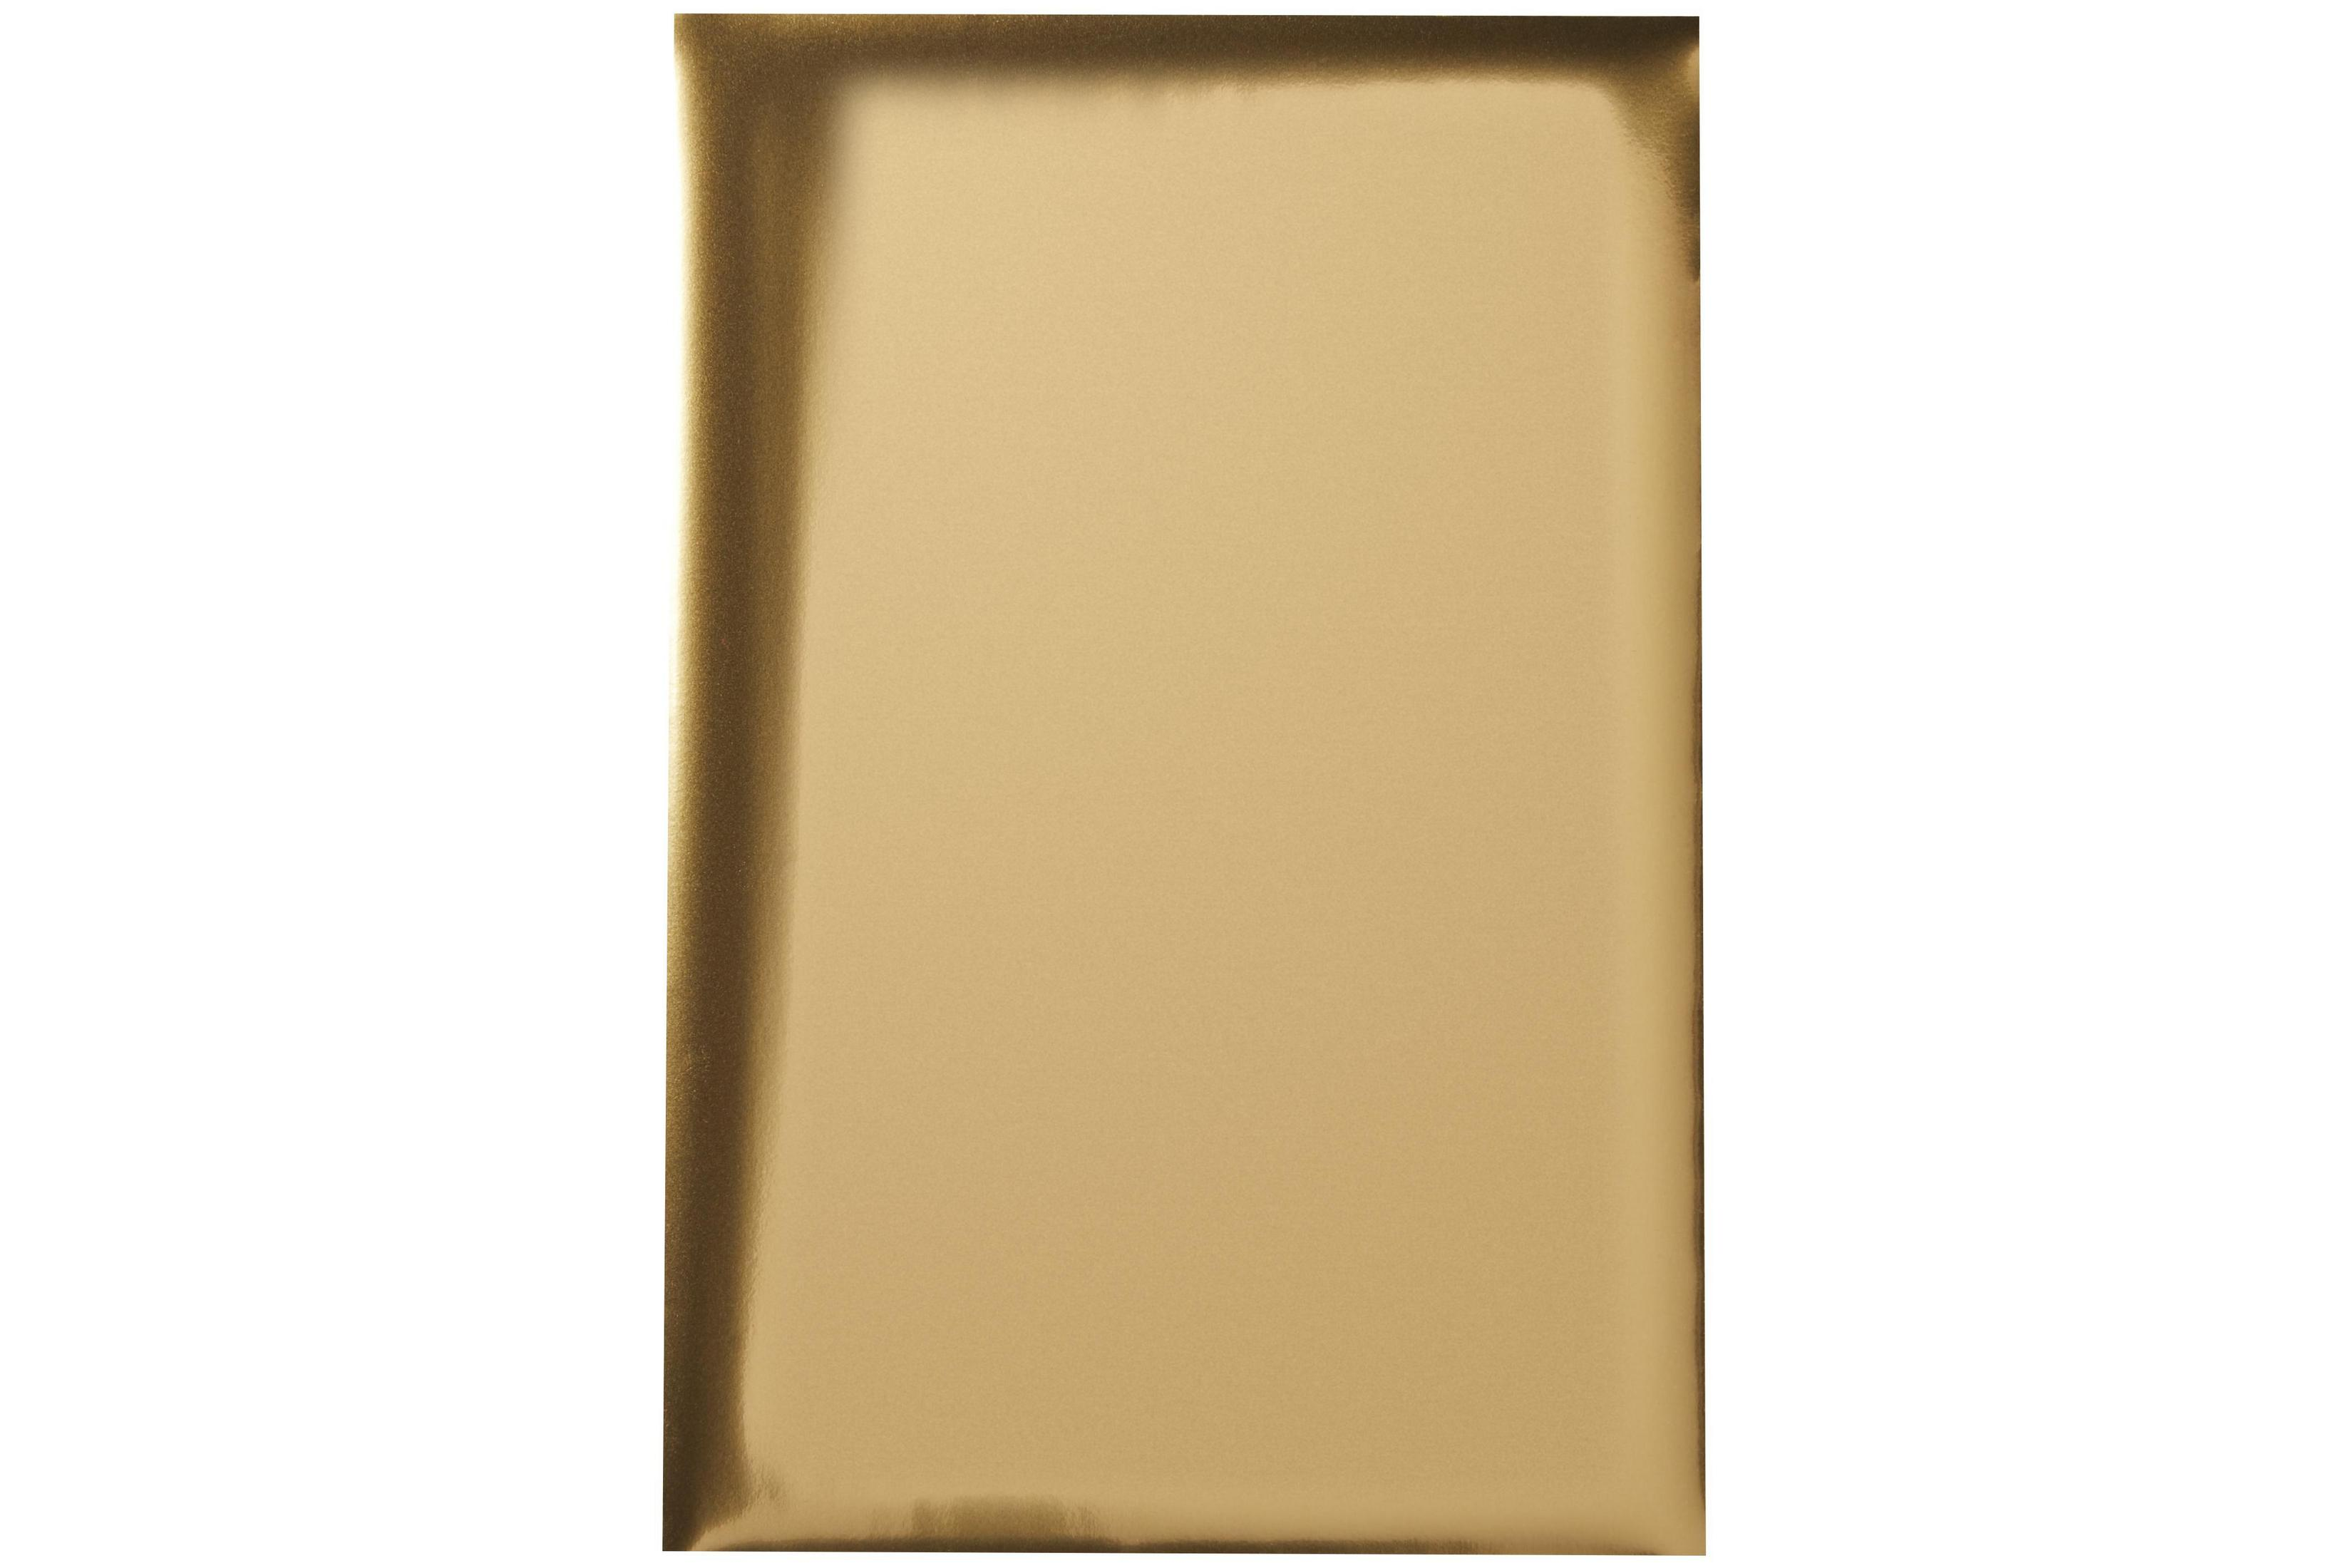 Gold/Silber/Rotgold 24 MET 10X15 CRICUT SAMPLER SHEETS FOIL SHEETS Transferfolie 2008716